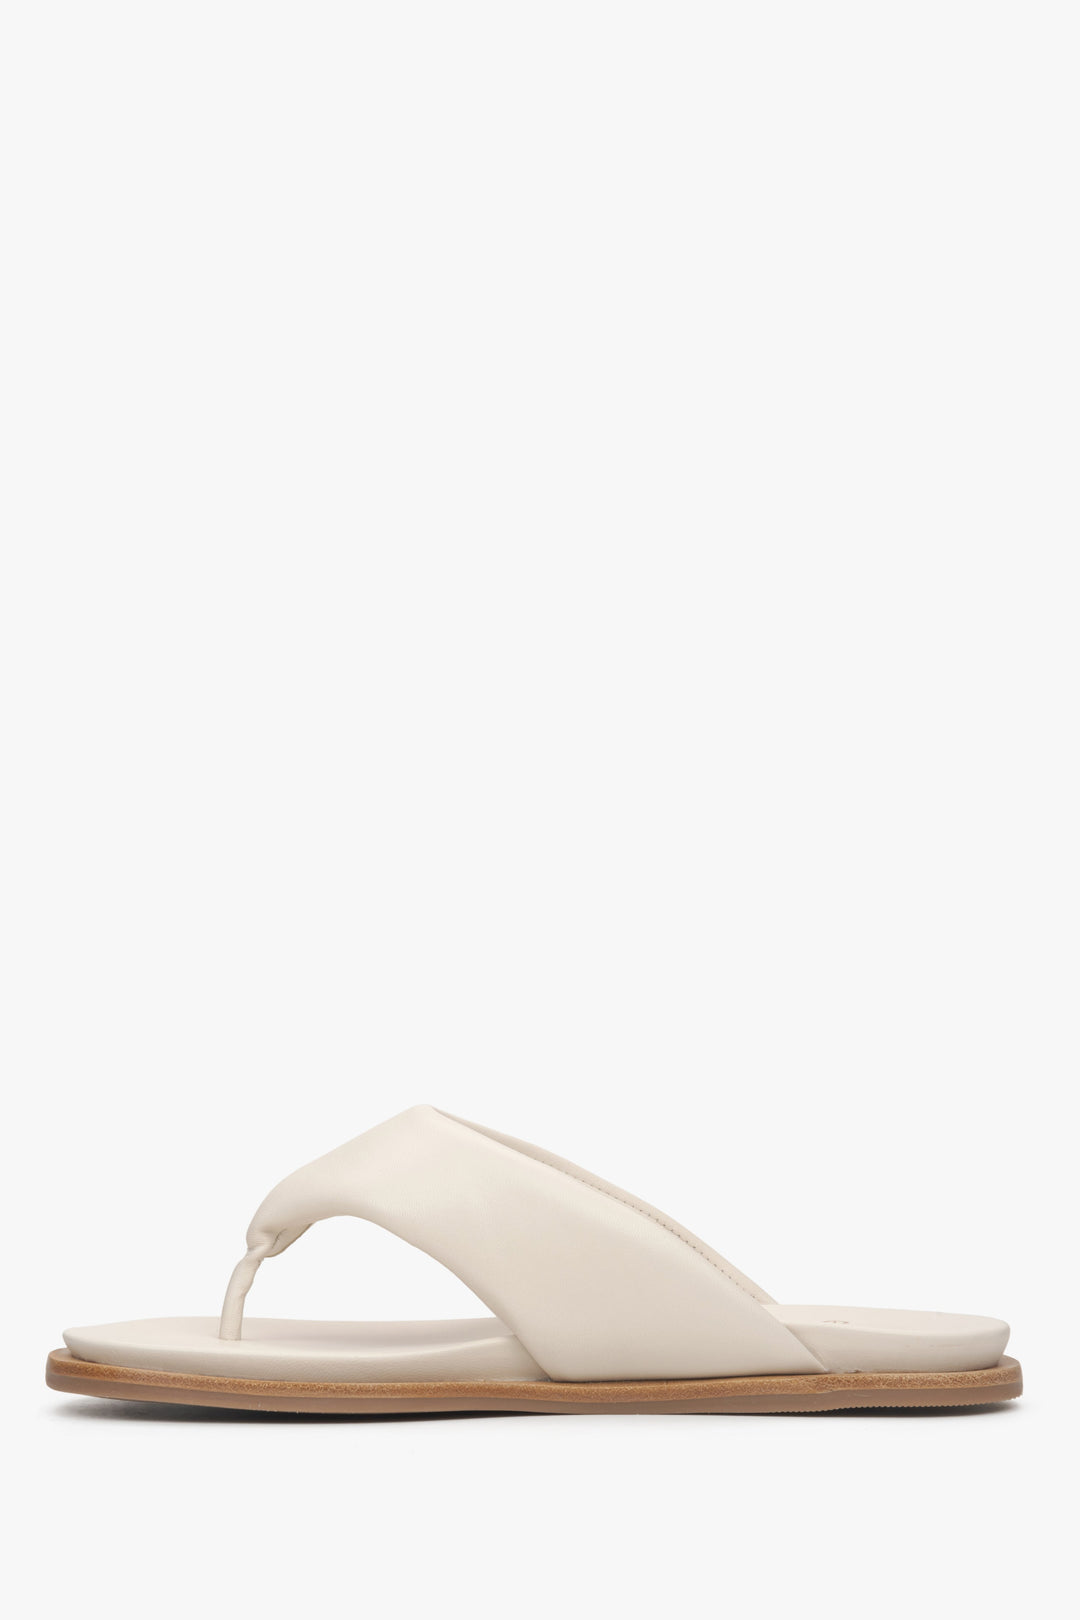 Women's light beige leather slide sandals Estro - shoe profile.